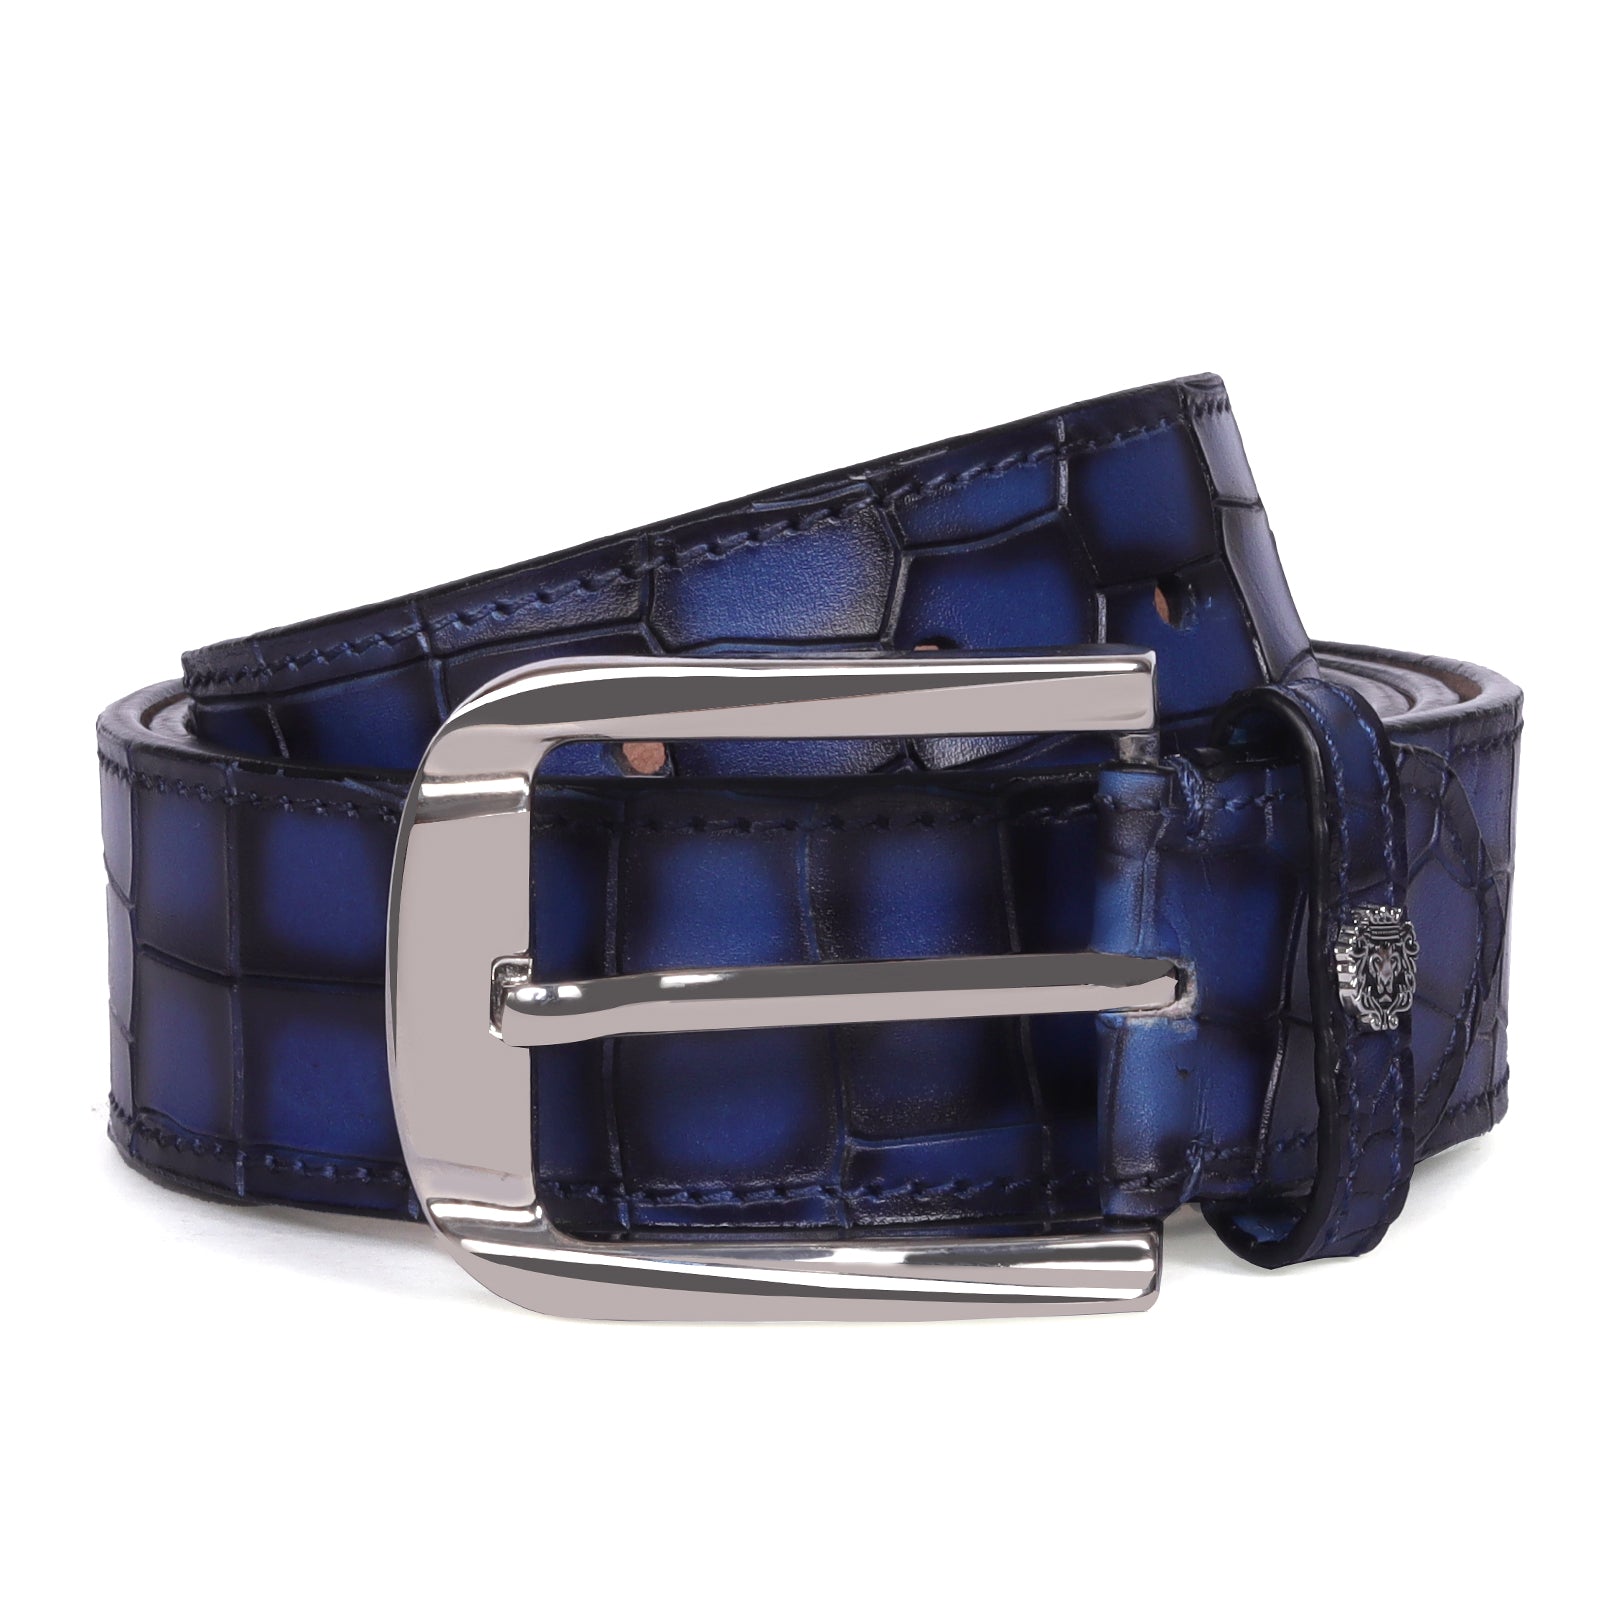 Smokey Blue Men's Belt in Deep Cut Croco Textured Leather with Silver Buckle Belt By Brune & Bareskin